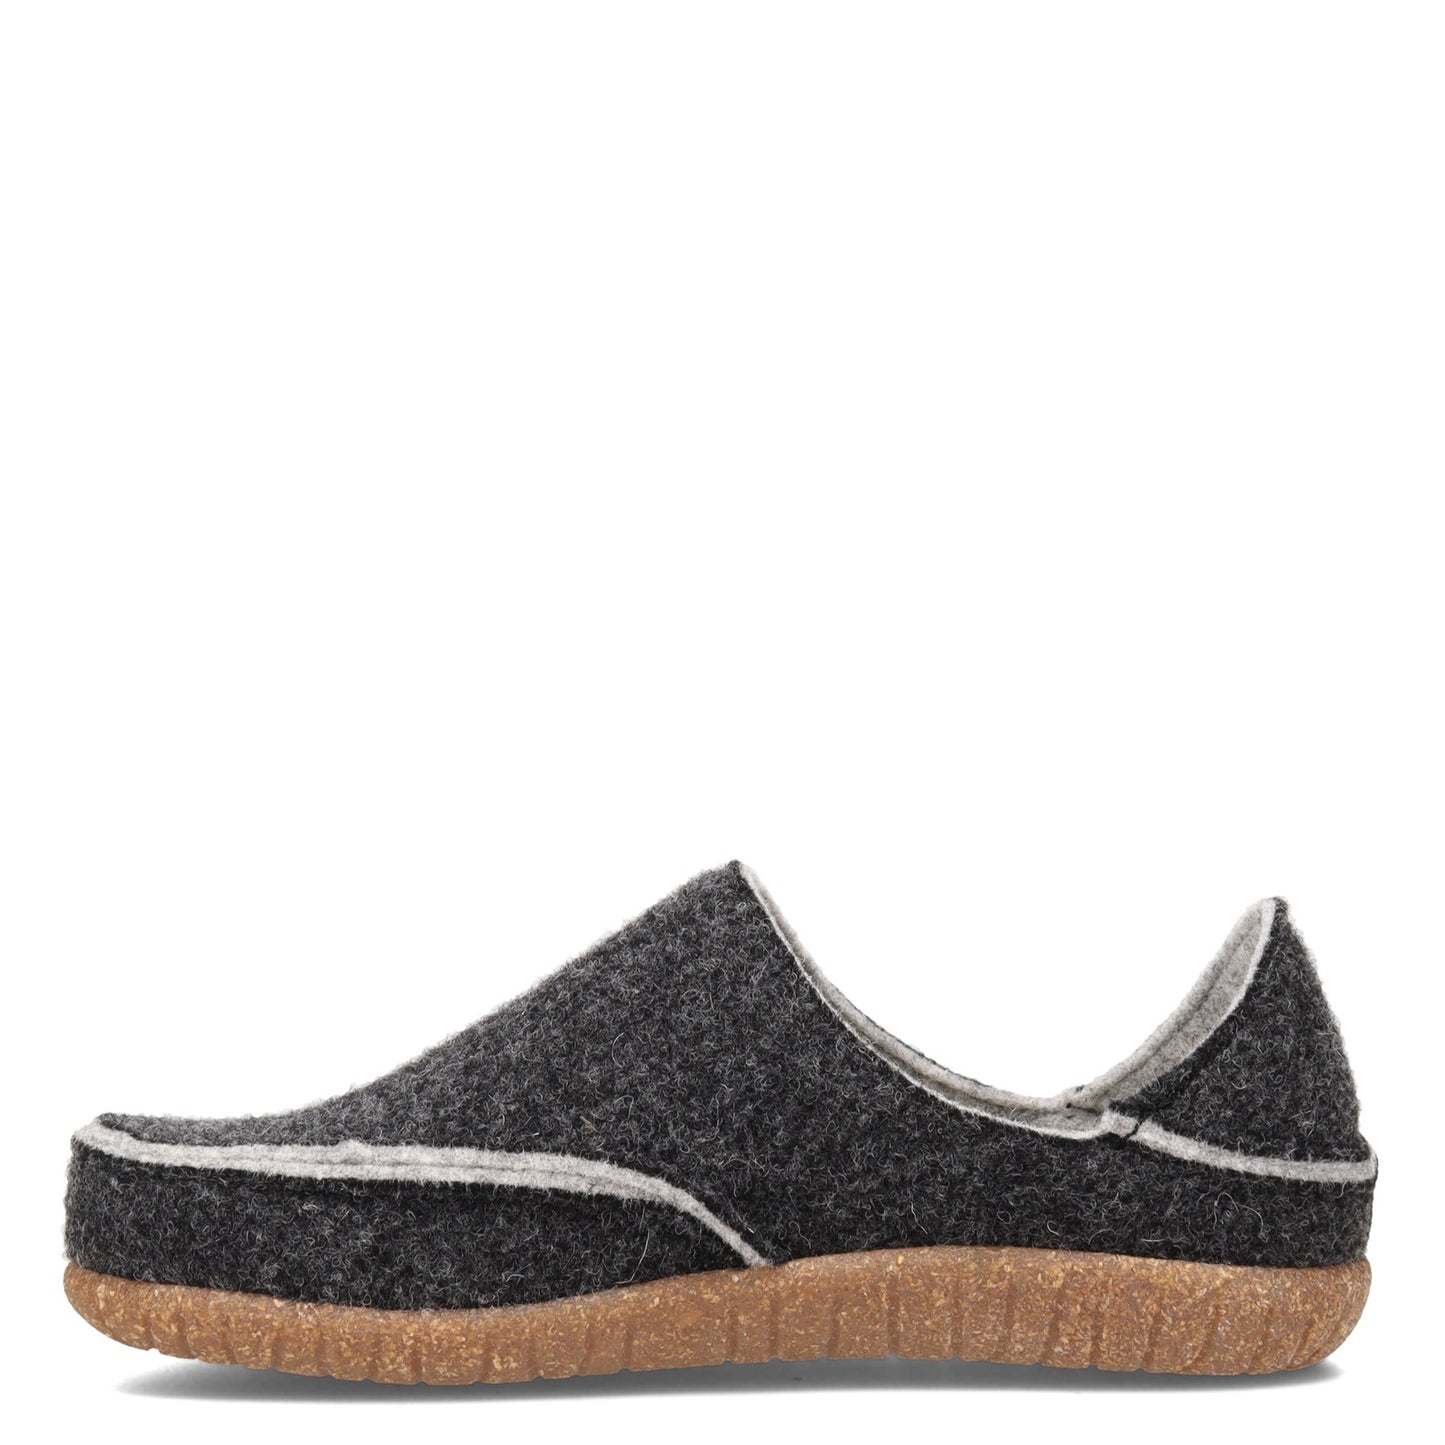 Peltz Shoes  Women's Taos Convertawool Slip-On Charcoal CNW-3303-CHA